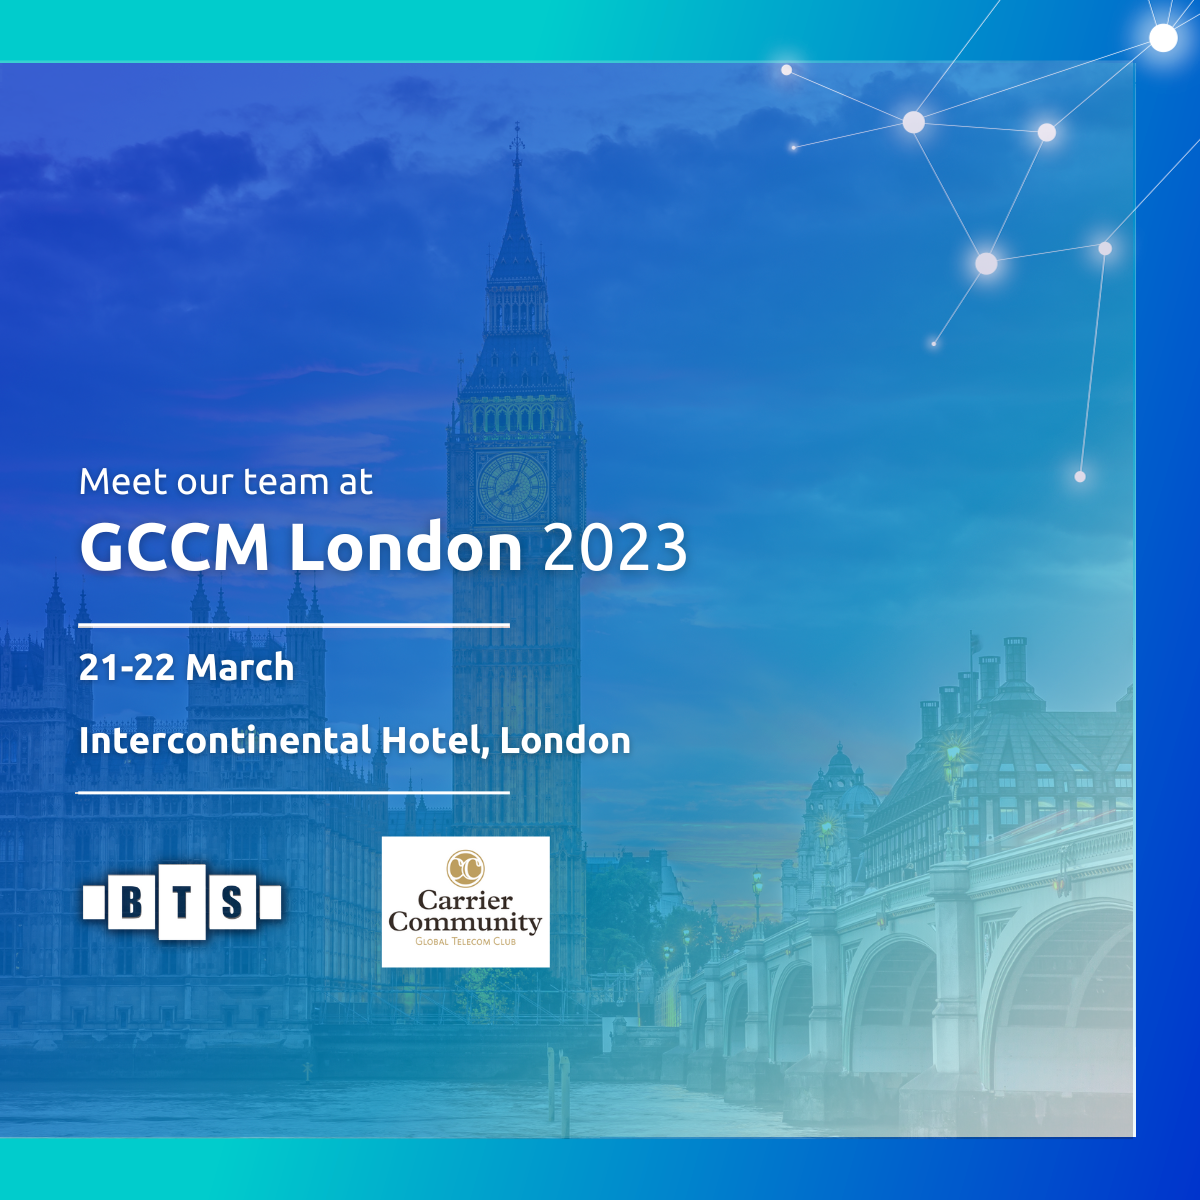 Information about GCCM London